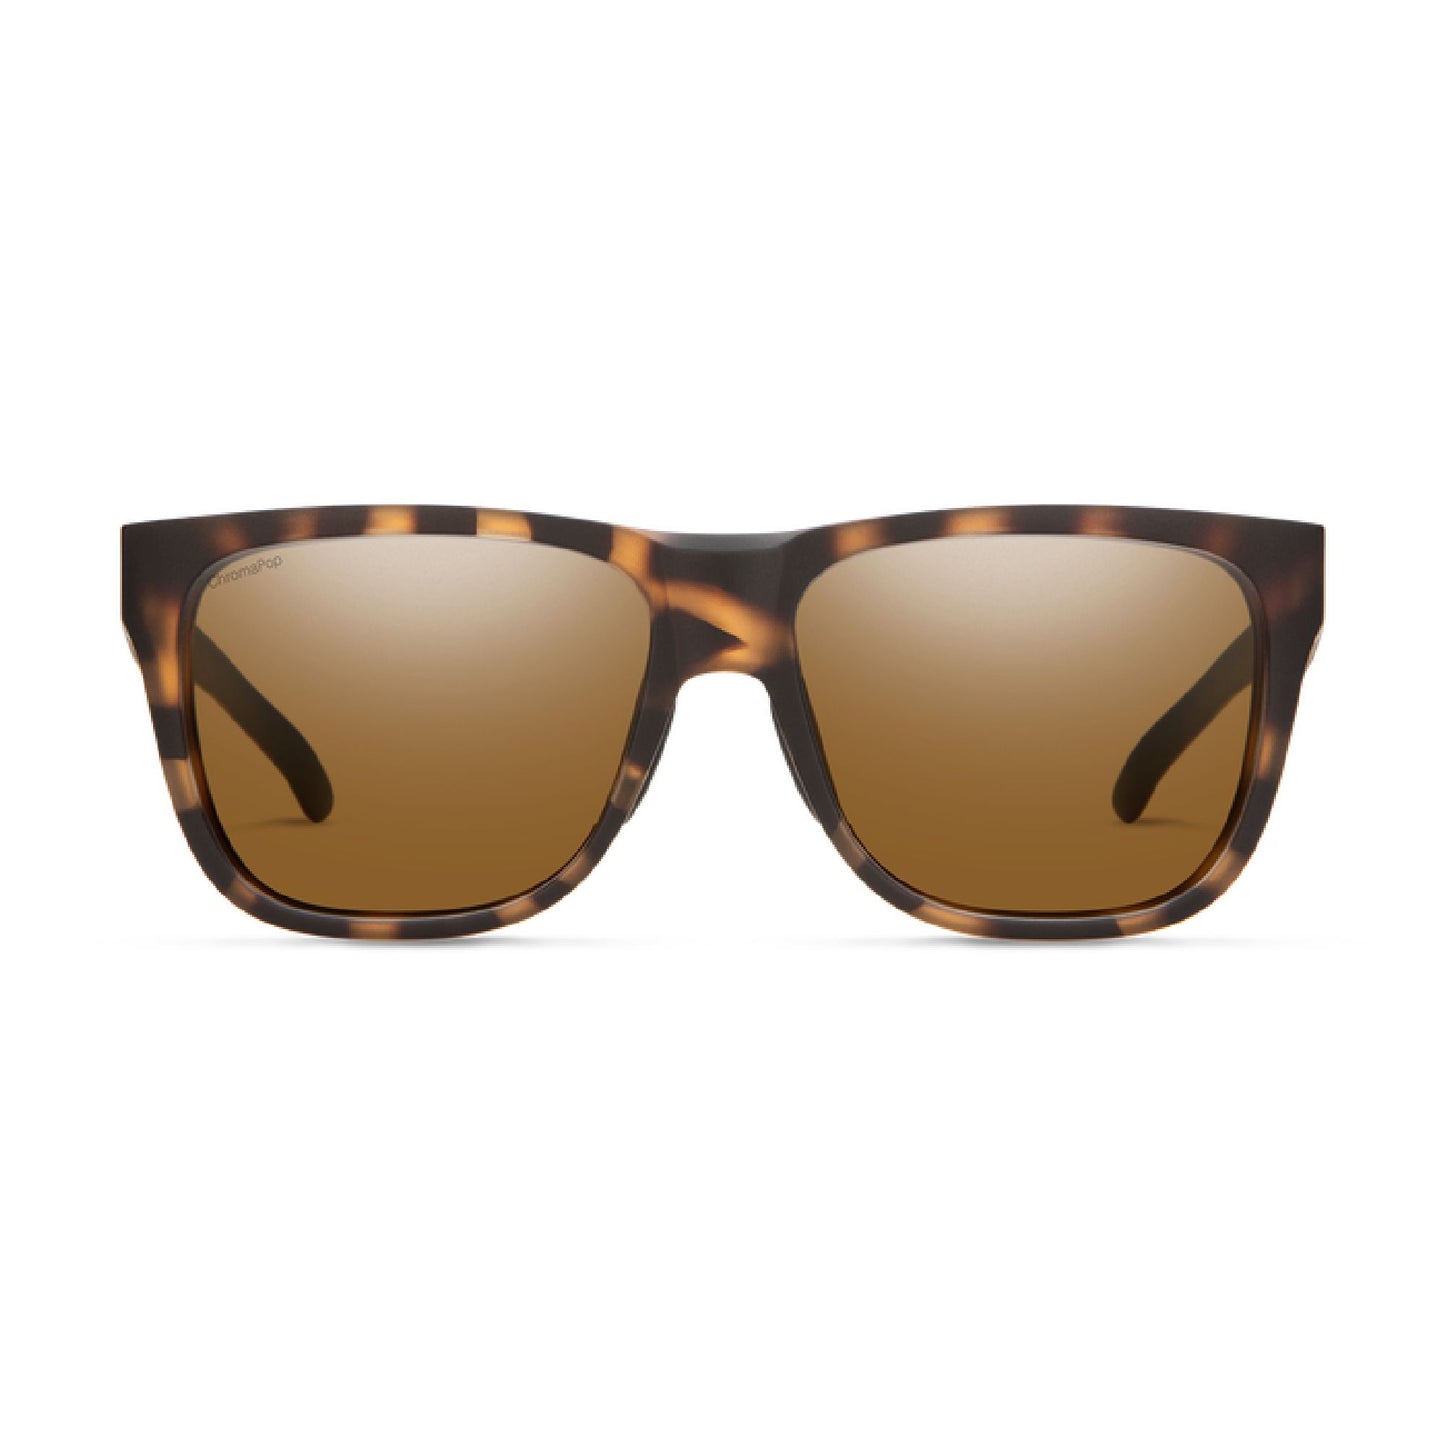 Smith Lowdown 2 Sunglasses Matte Tortoise ChromaPop Polarized Brown Sunglasses